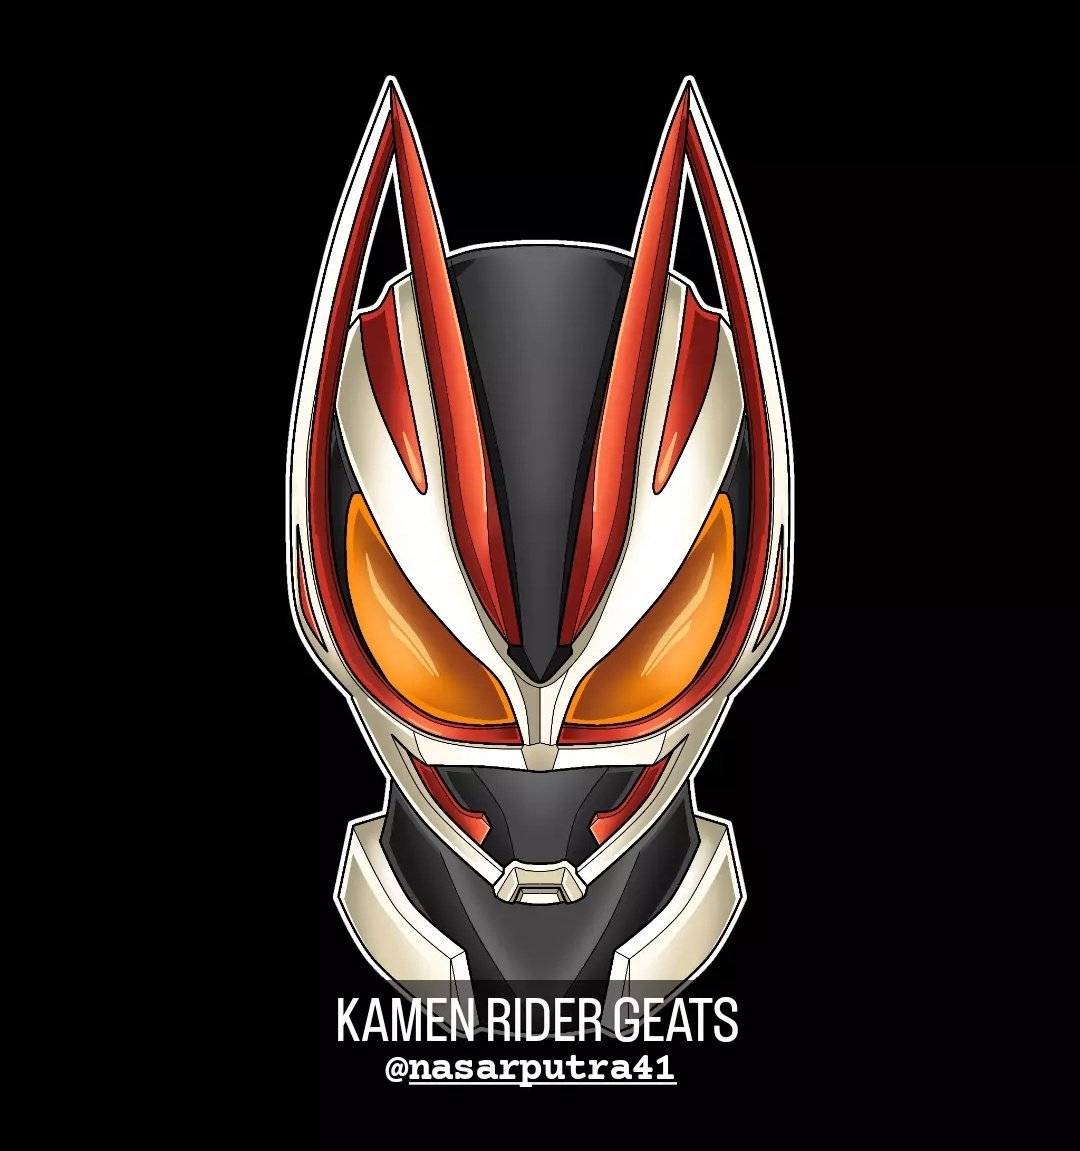 ORCA - (Kamen Rider Geats) #KamenRider #KamenRiderGeats